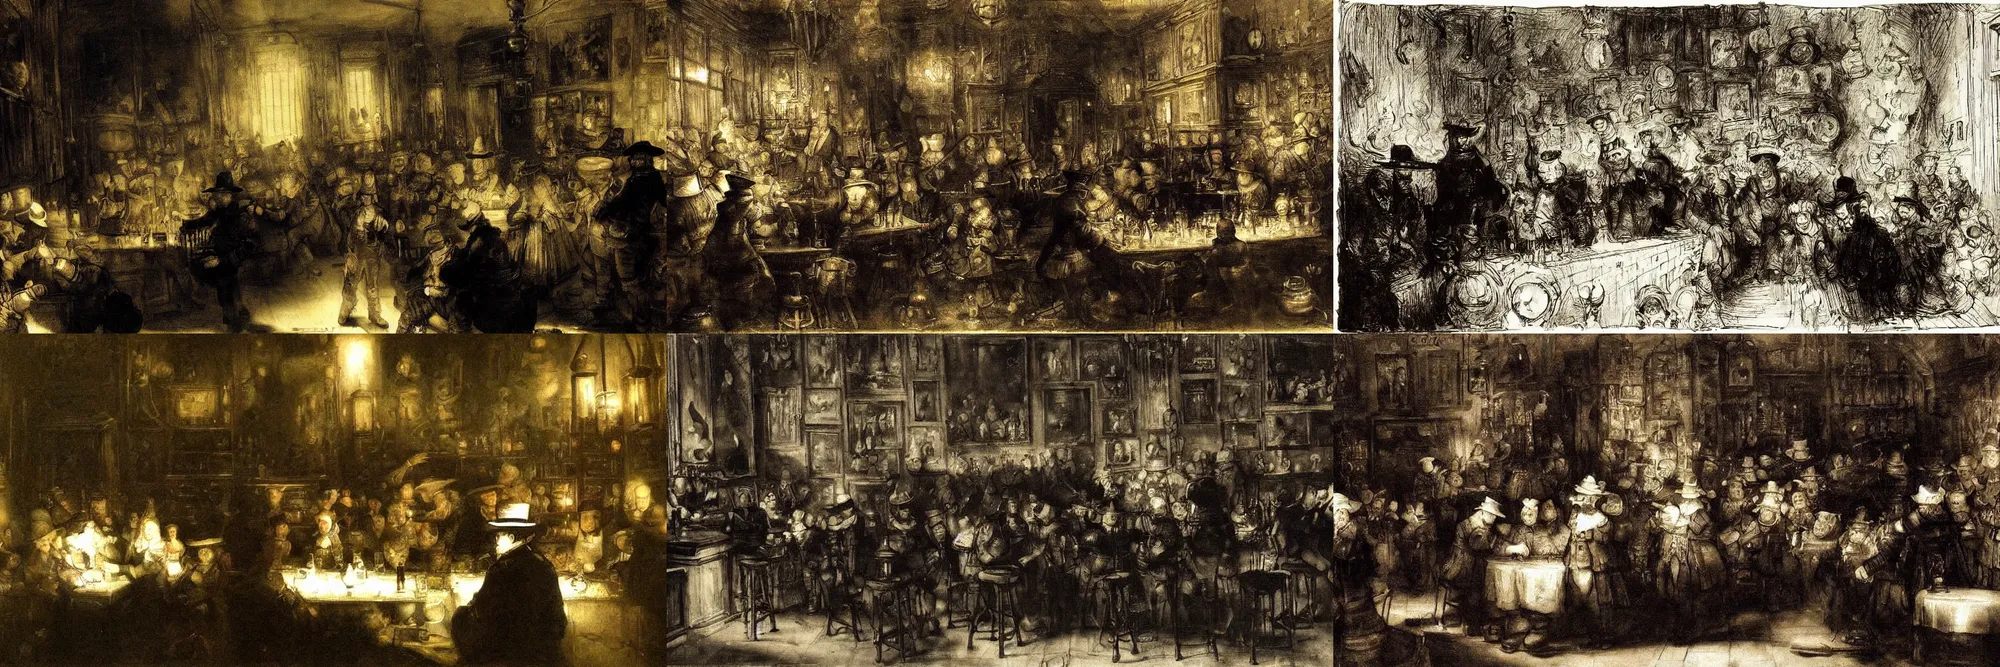 Prompt: secret tea society, dark interior of bar, art by van rijn, rembrandt